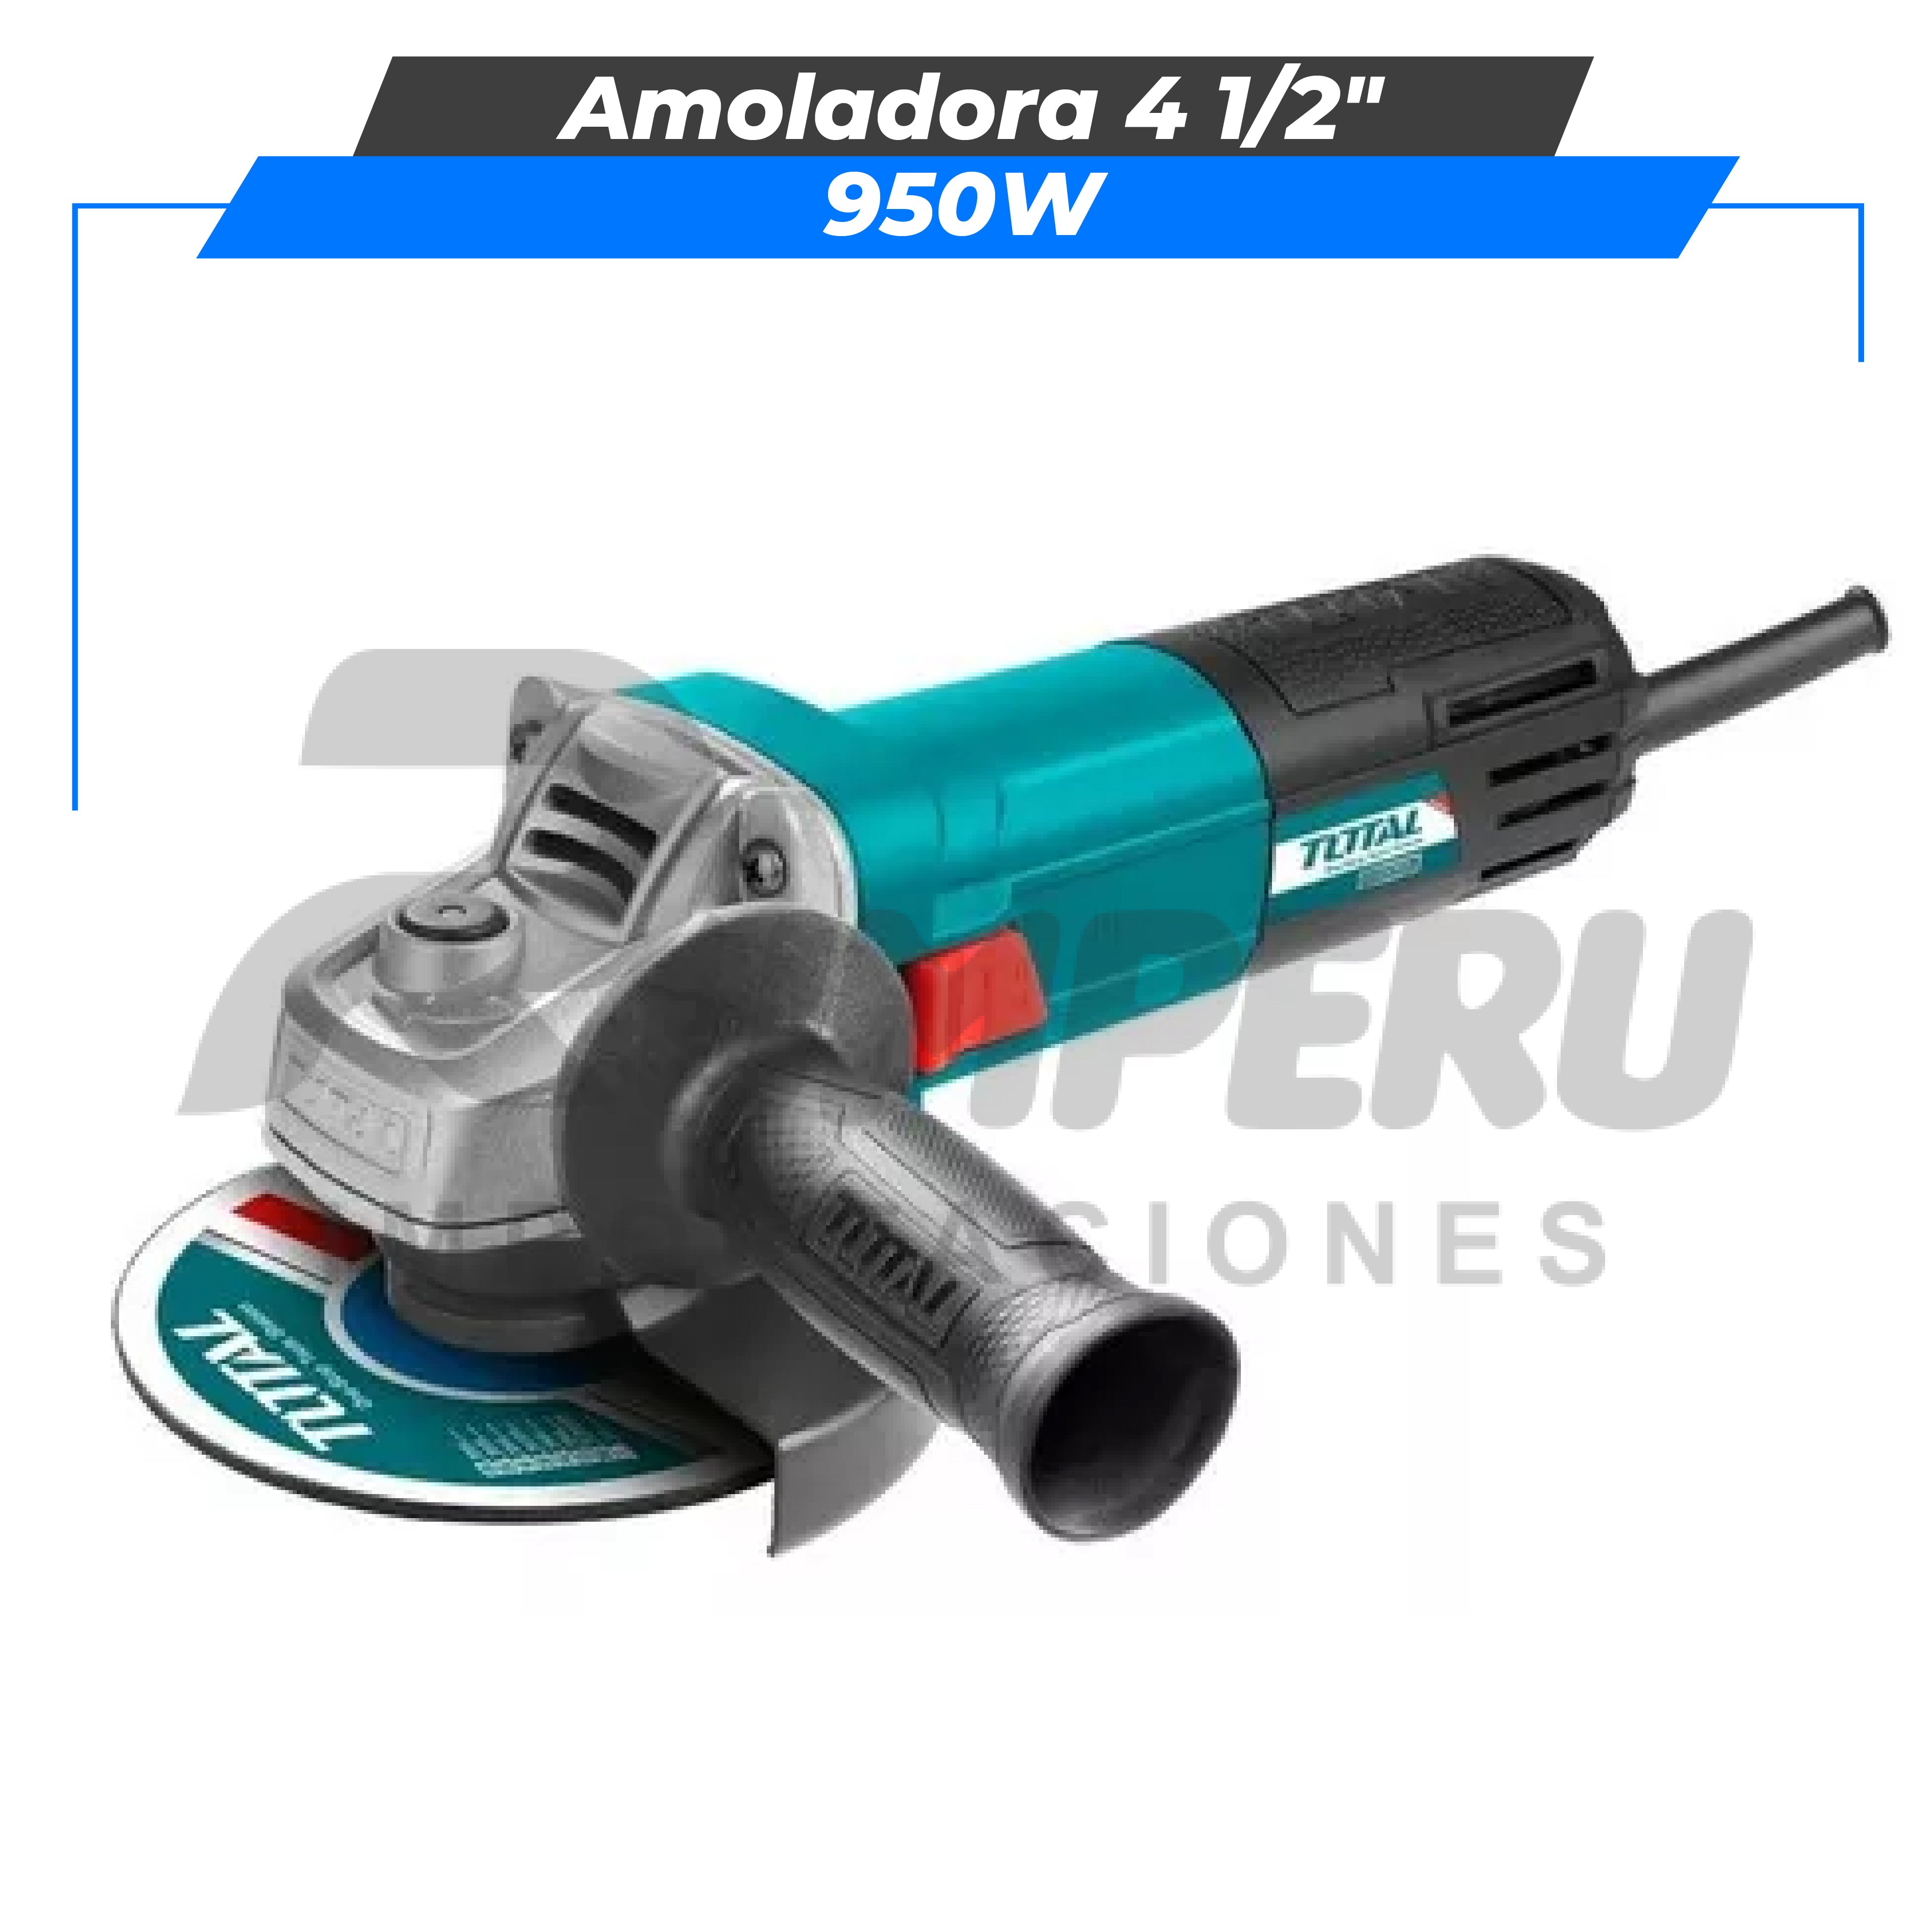 Amoladora 4 1/2" 950W